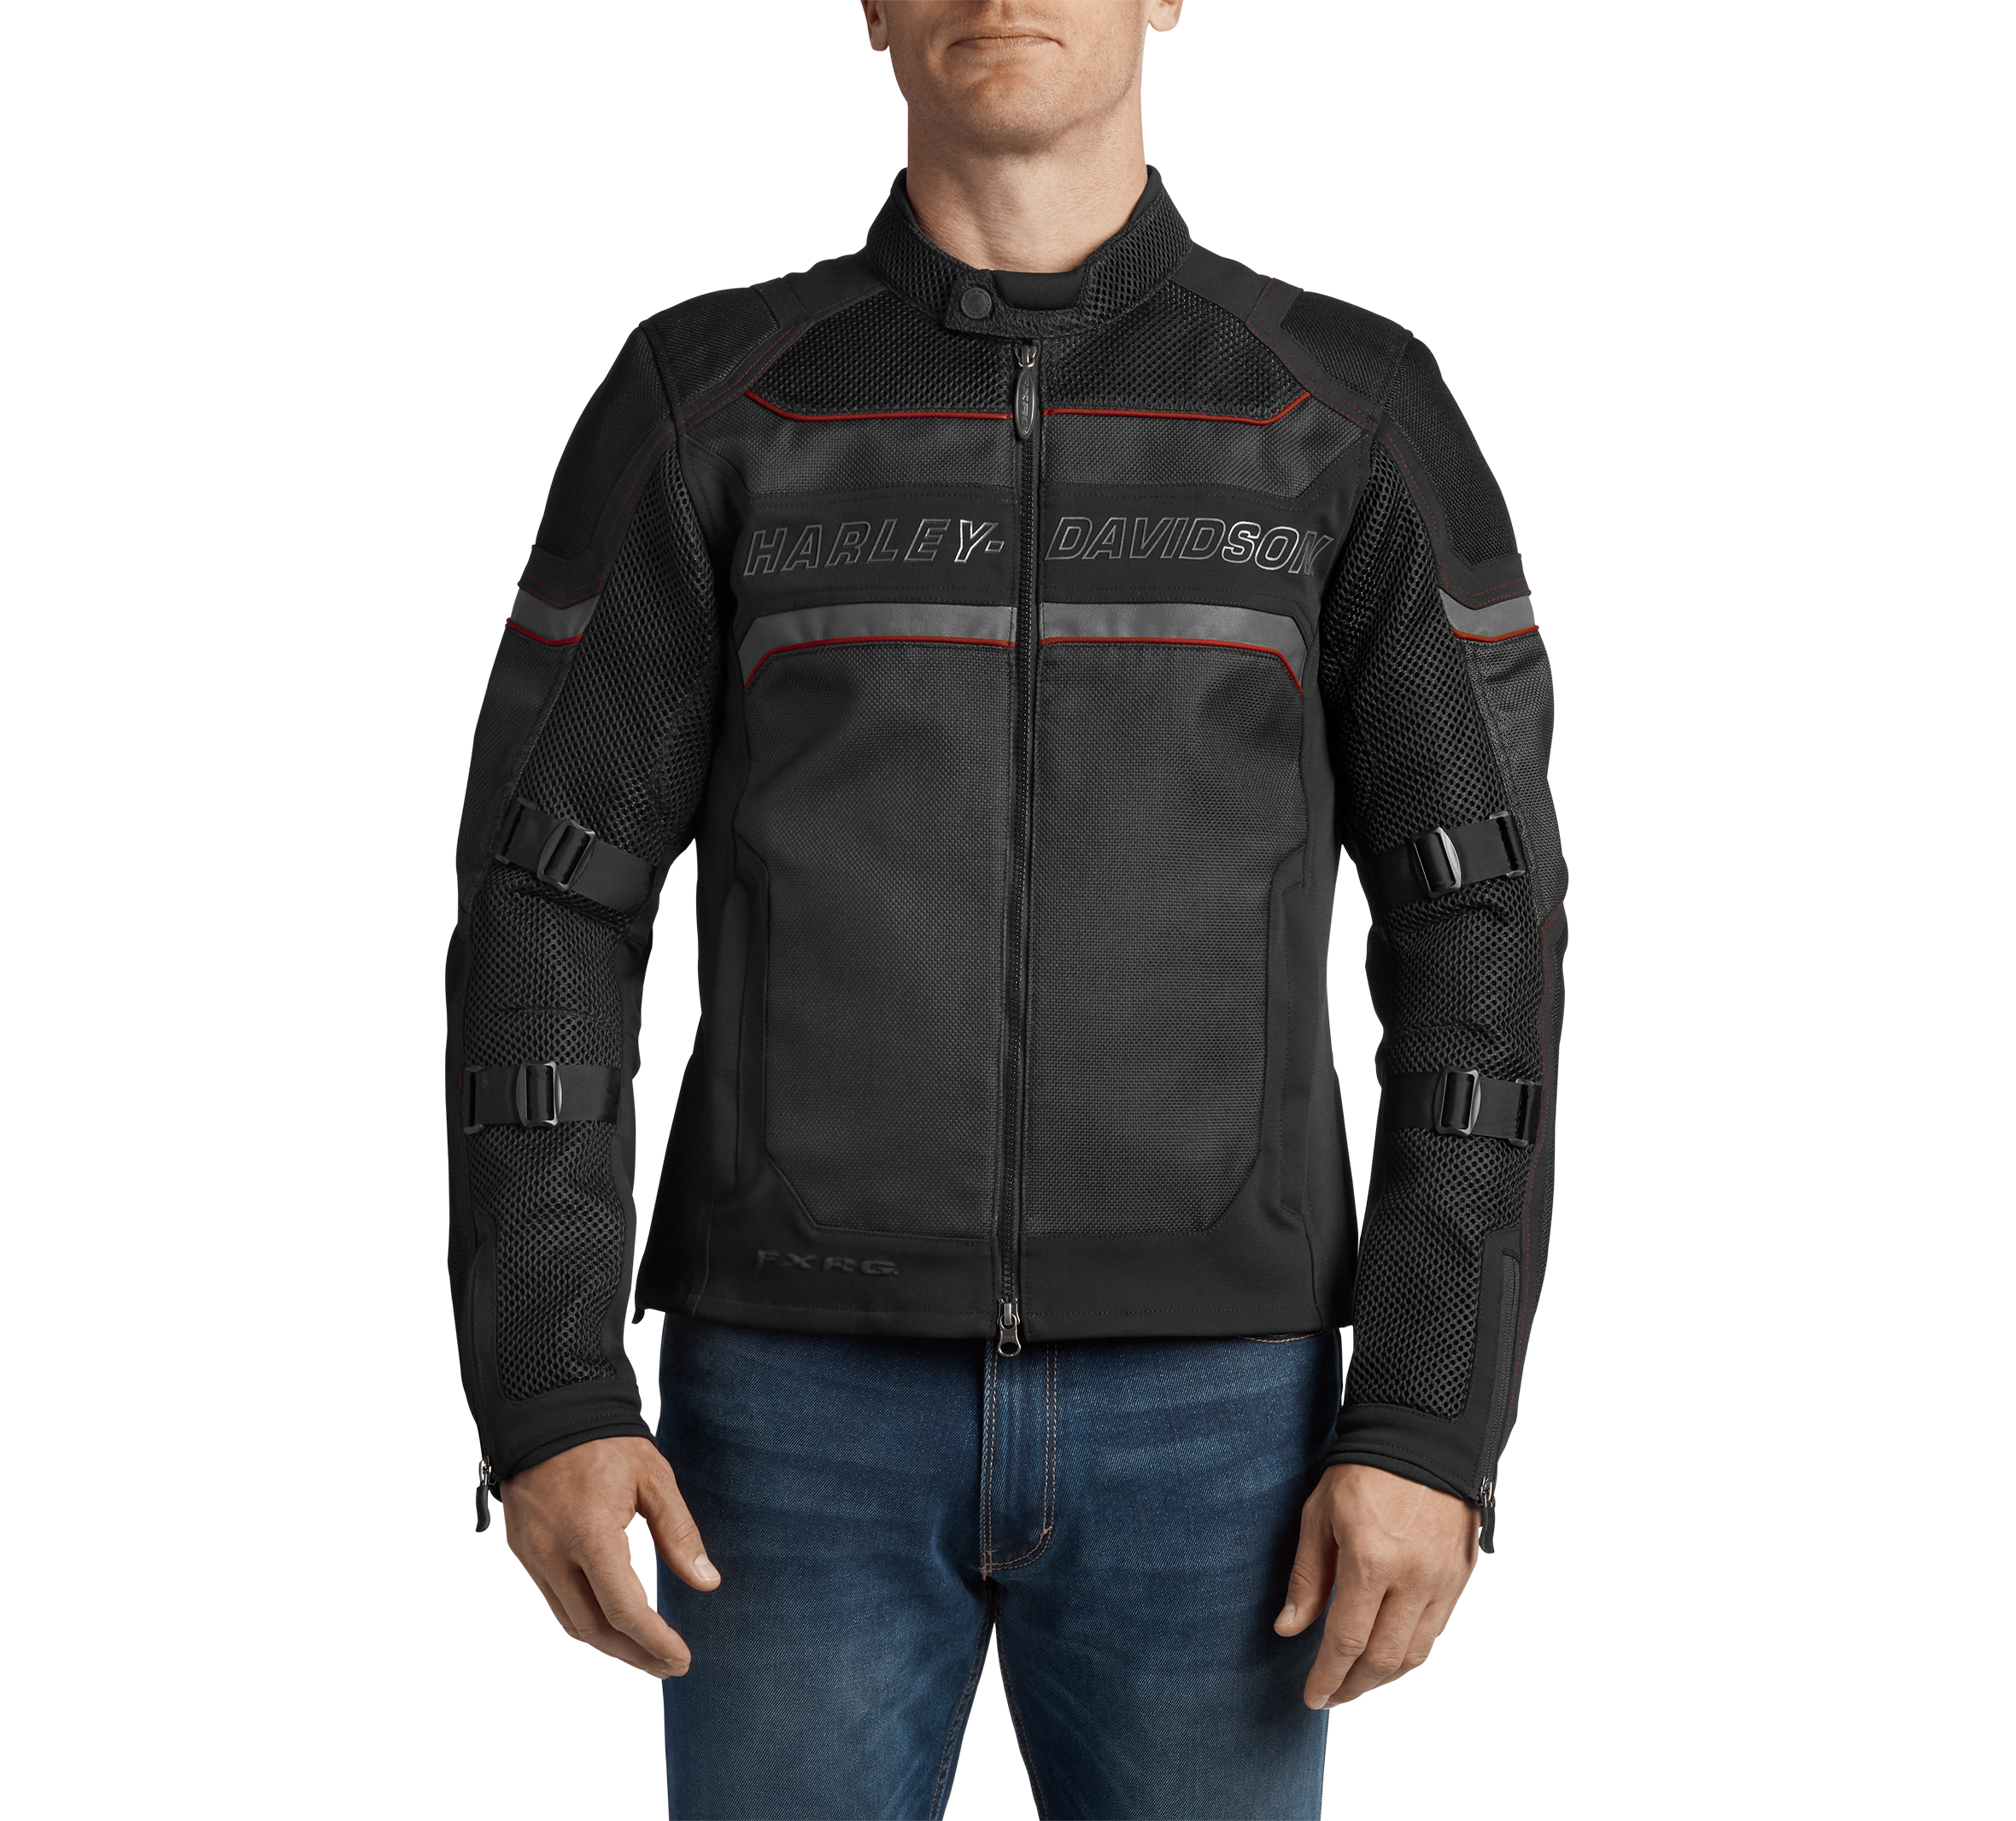 Harley Davidson Men S Fxrg Waterproof Leather Jacket Triple Vent System Coolcore Technology 98038 19vm